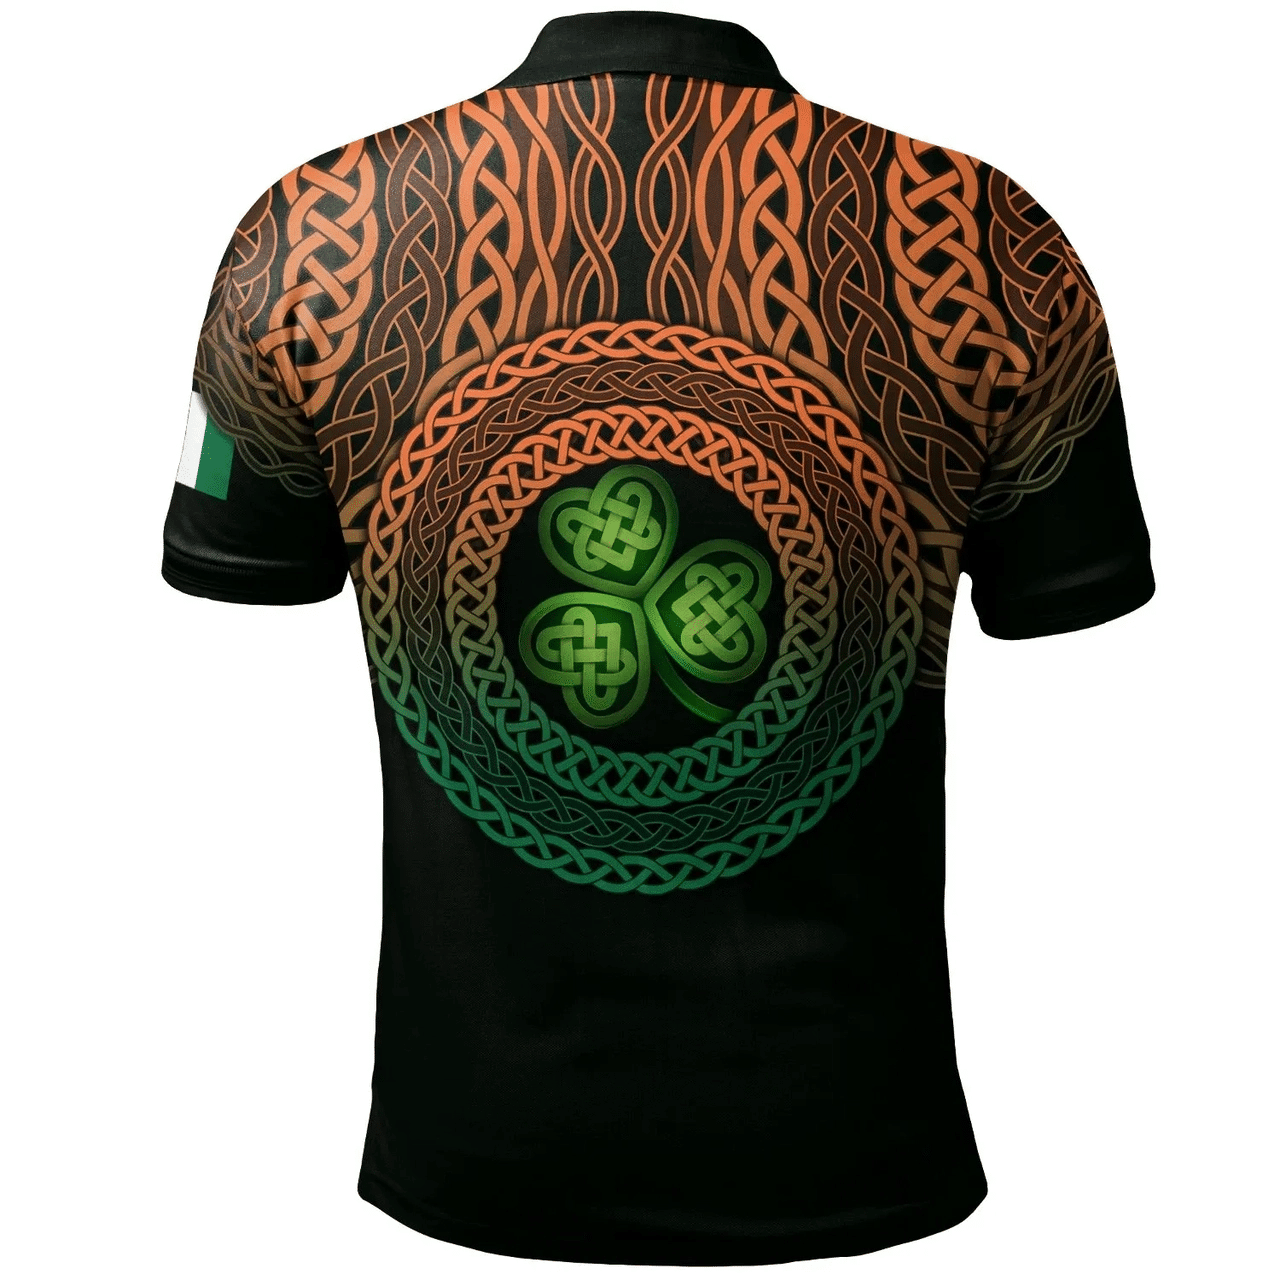 1stIreland Ireland Polo Shirt - Crowe or McEnchroe Irish Family Crest Polo Shirt - Celtic Pride A7 | 1stIreland.com